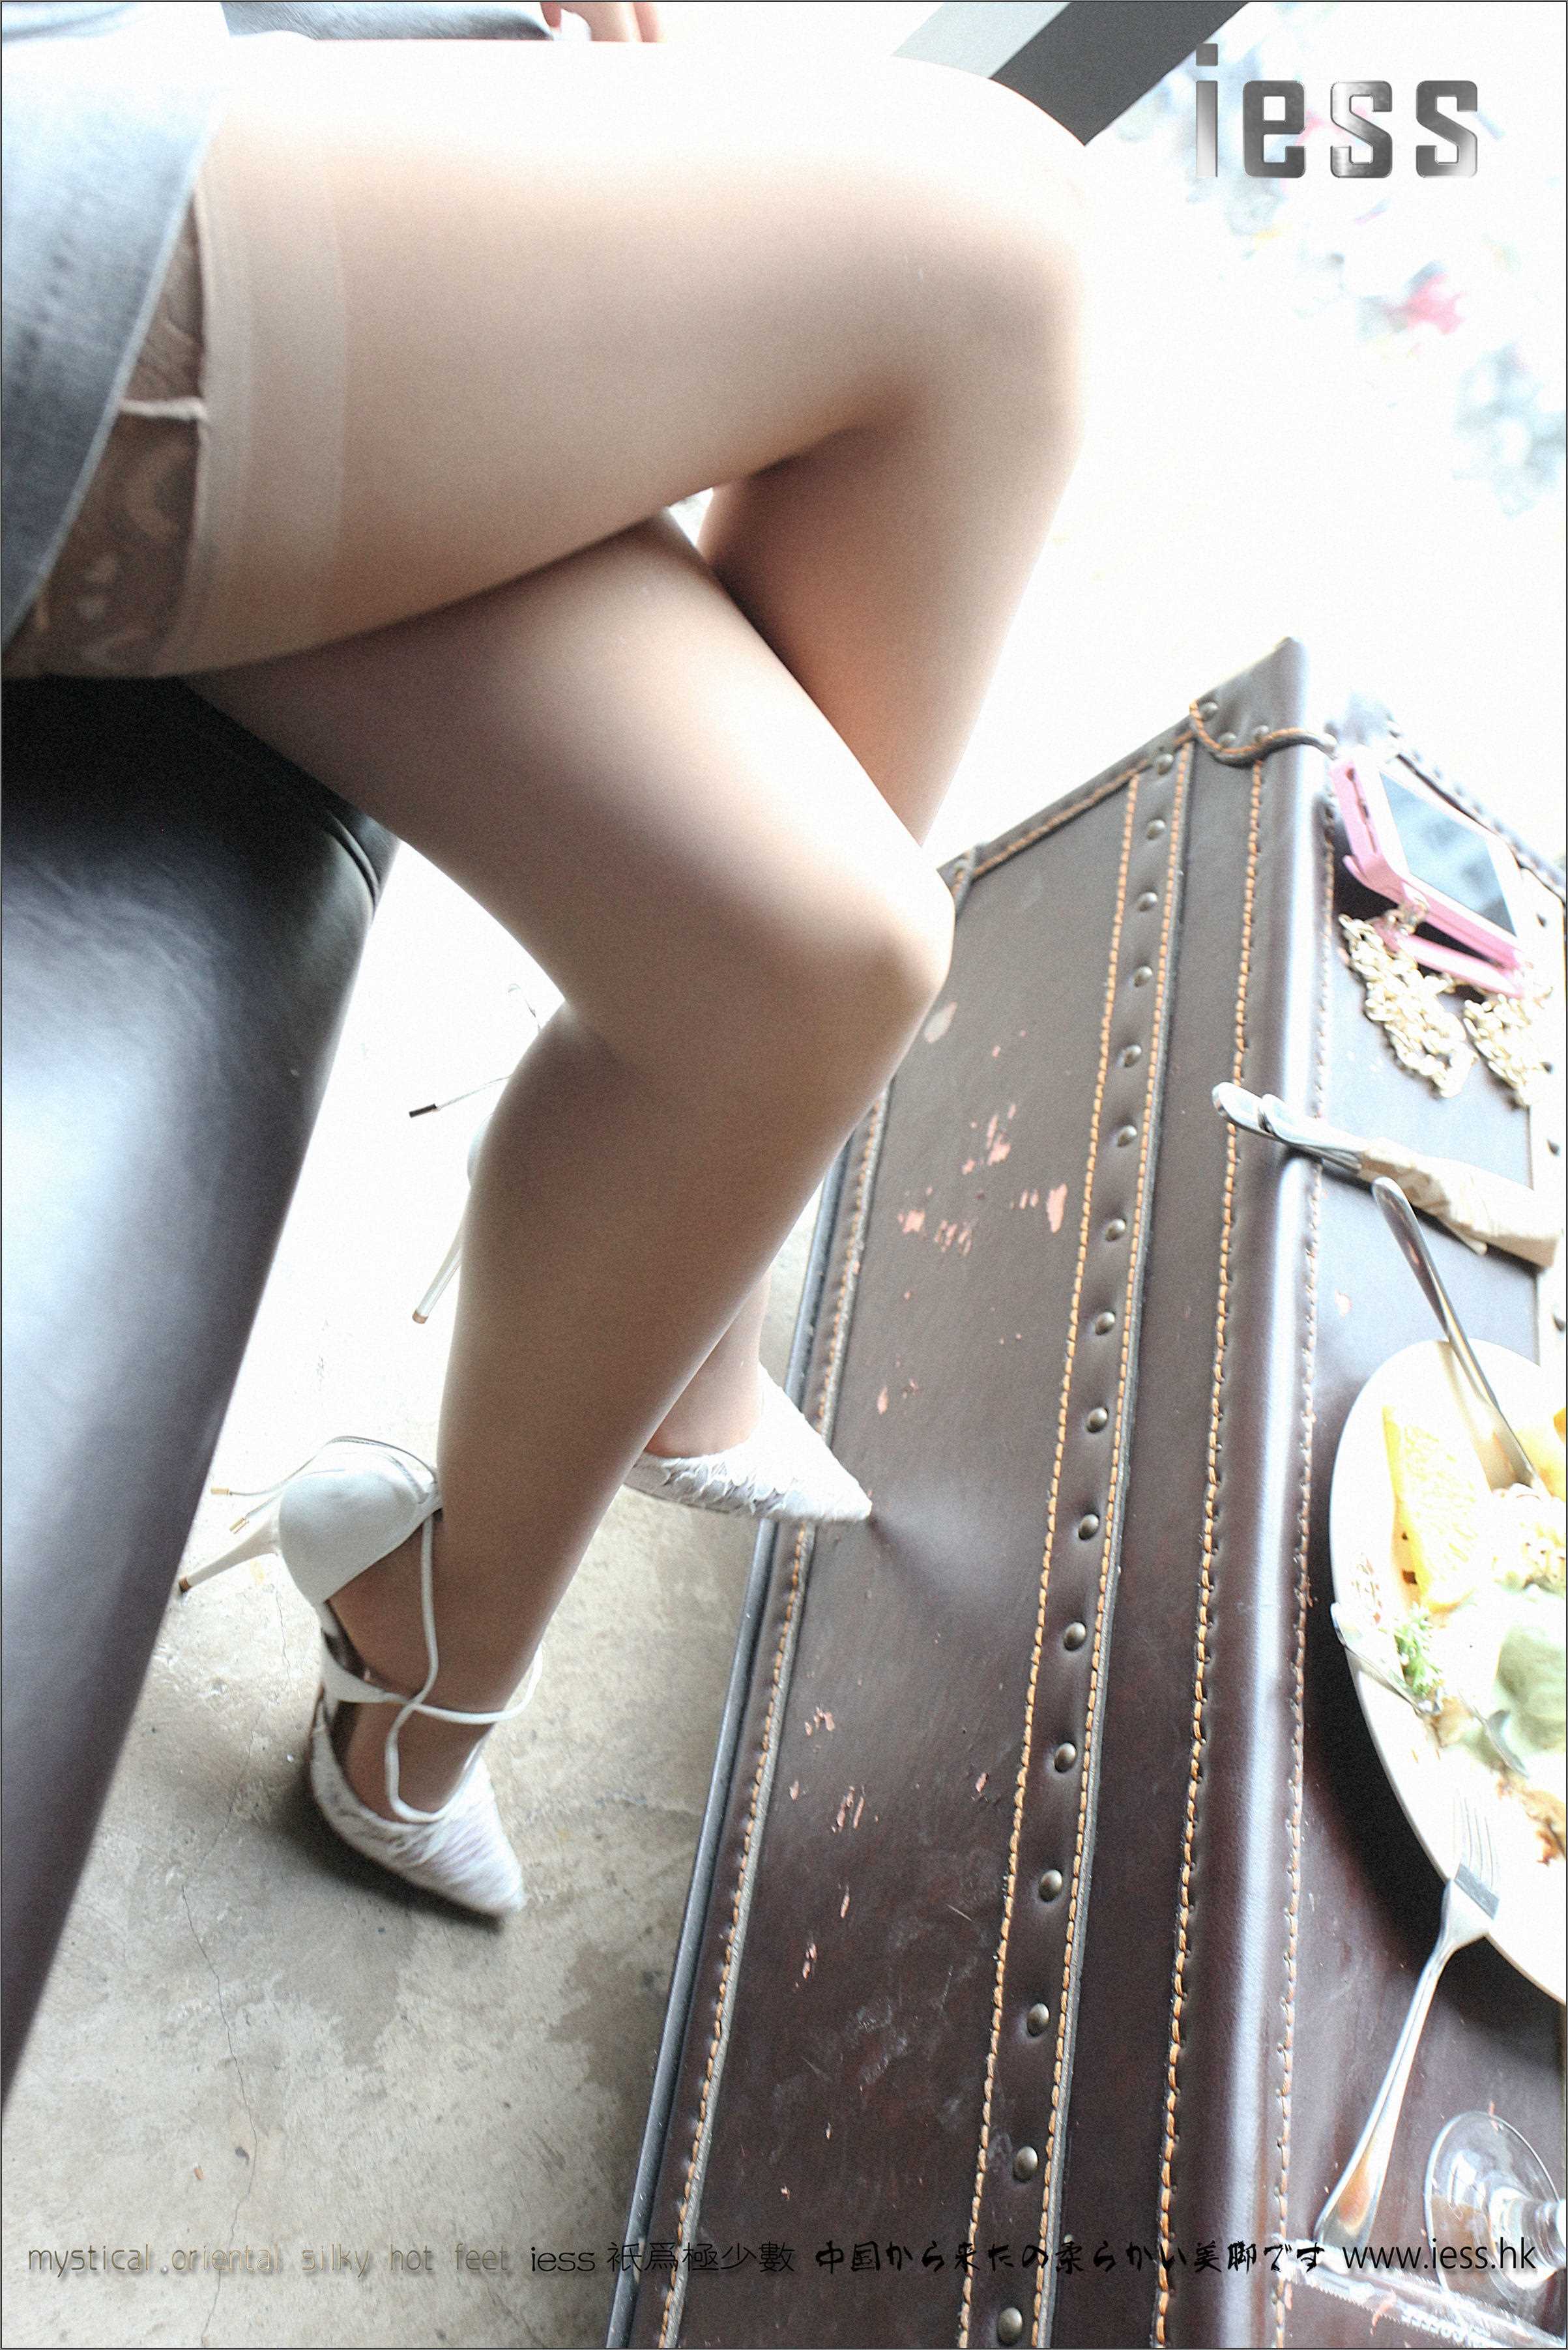 China Beauty Legs and feet 155